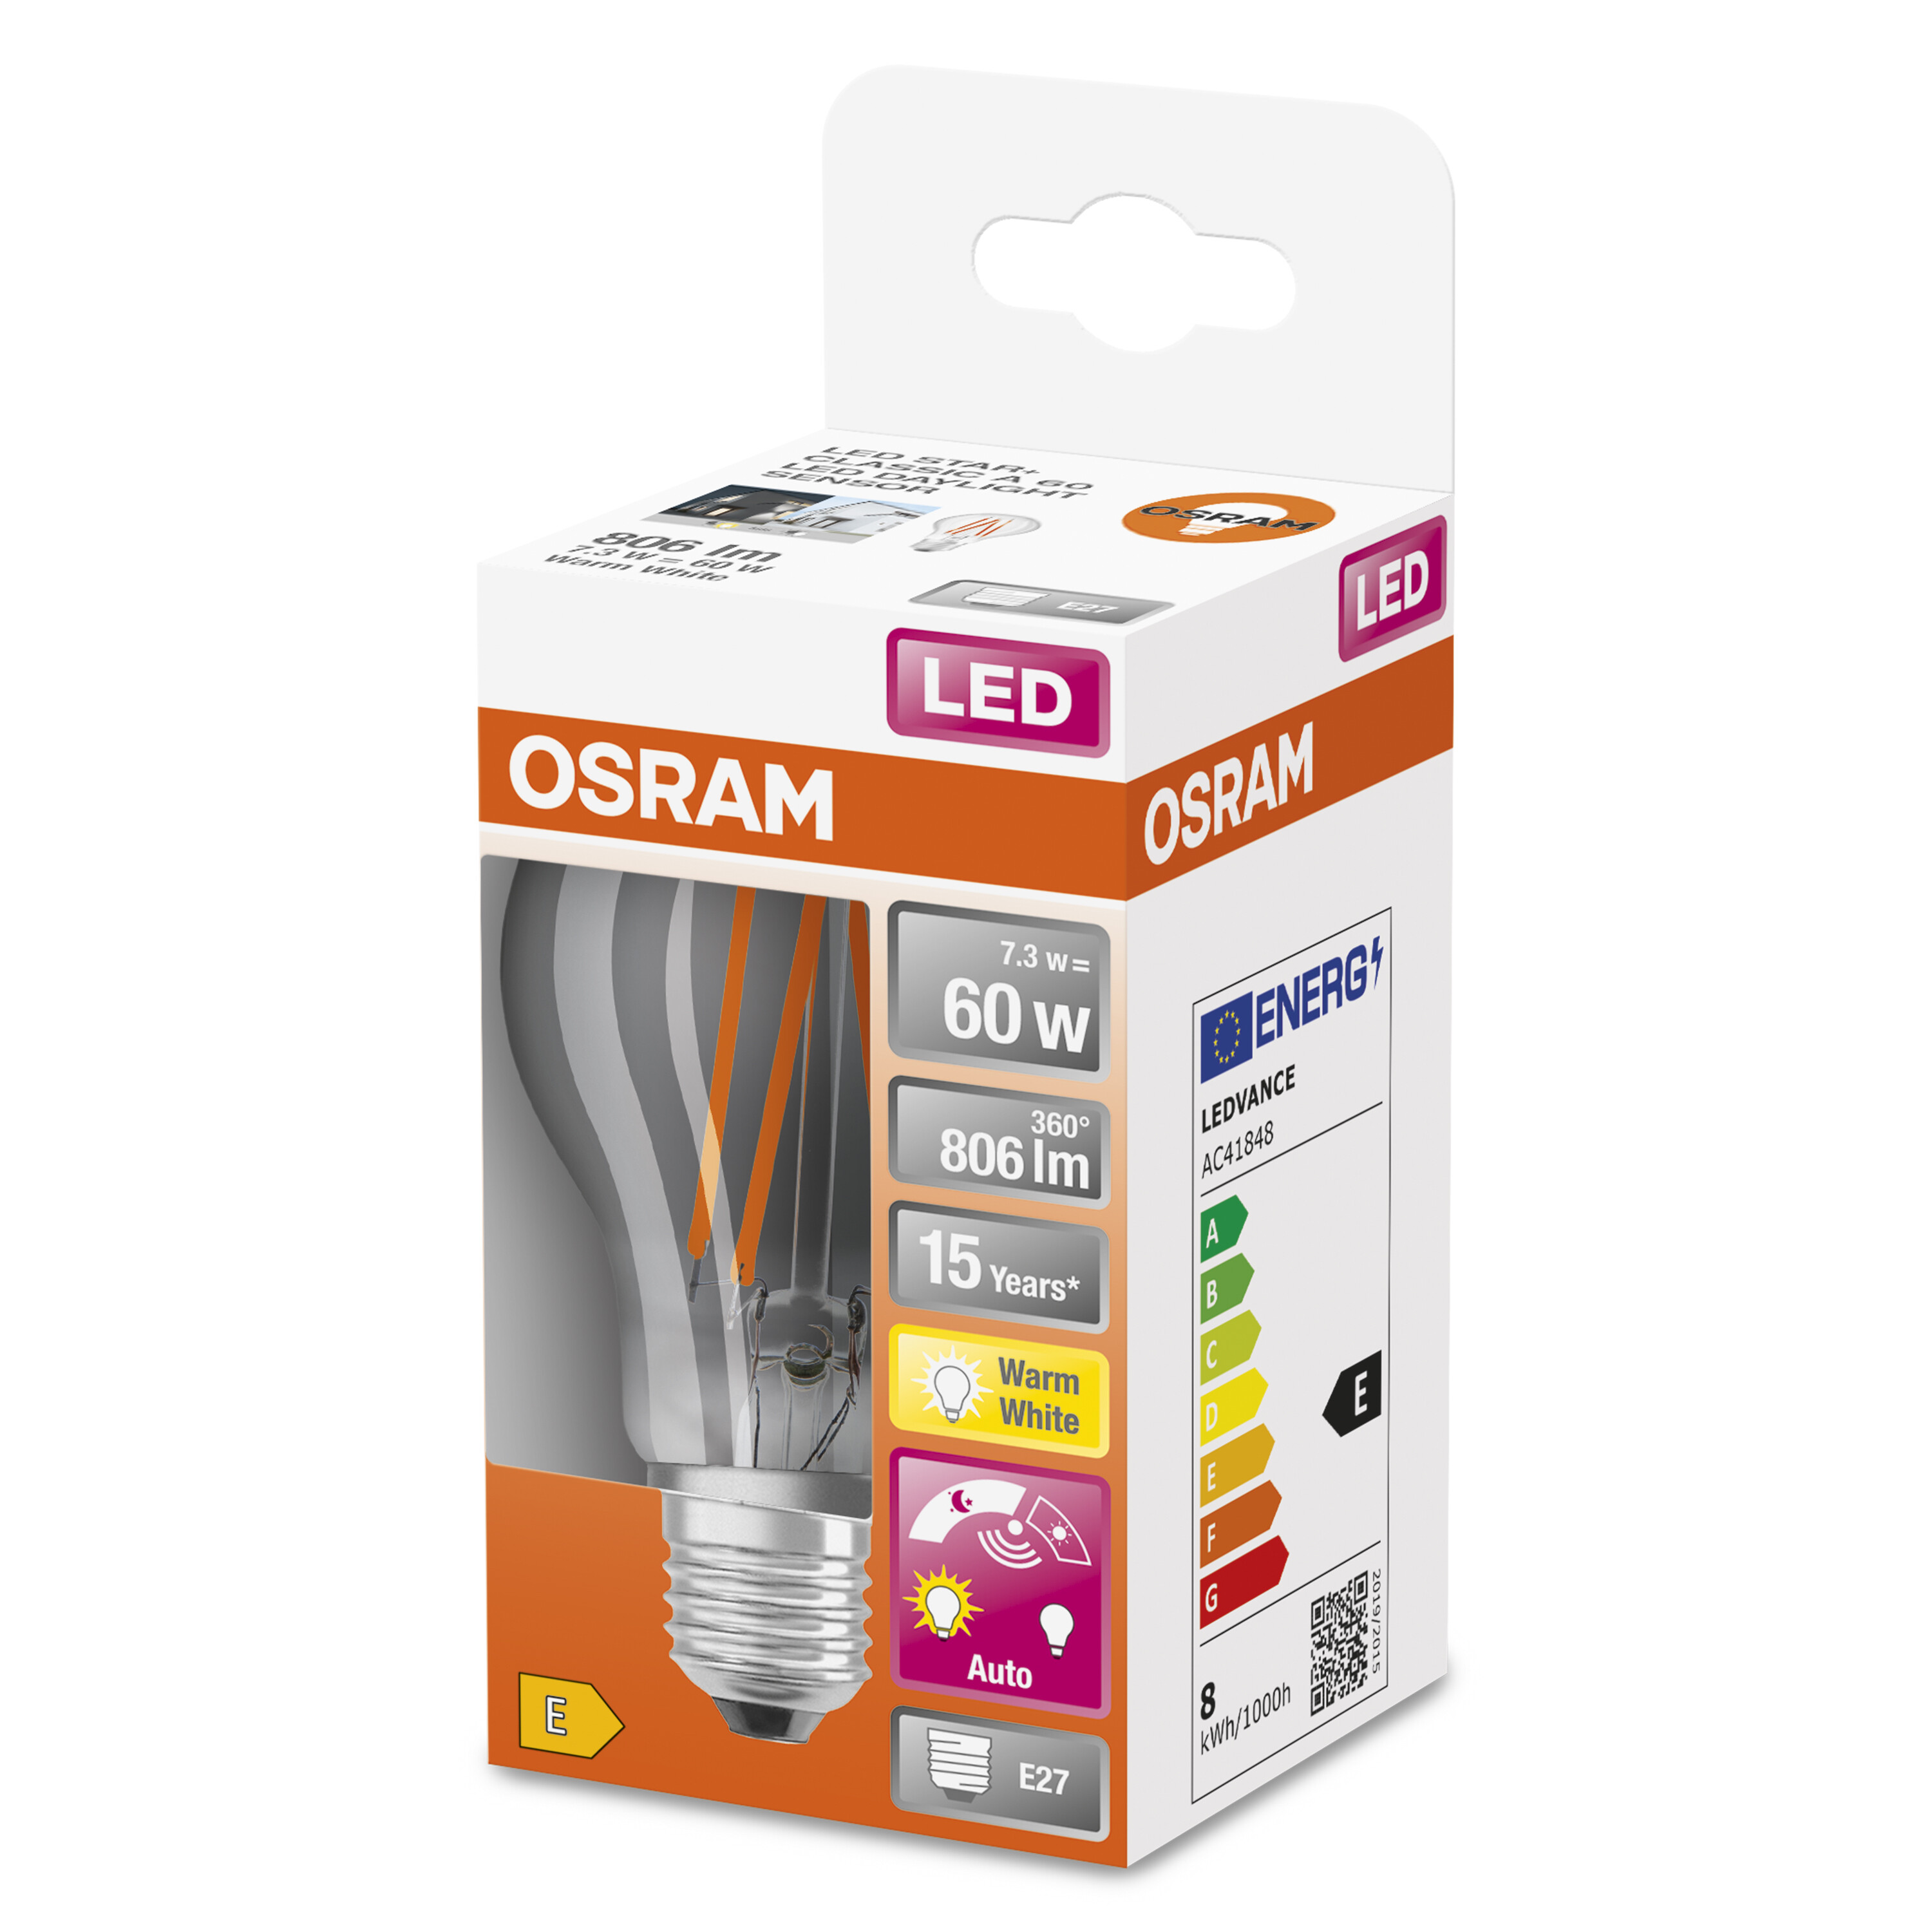 LED Lampe Lumen A 806 OSRAM  Warmweiß CLASSIC SENSOR LED DAYLIGHT